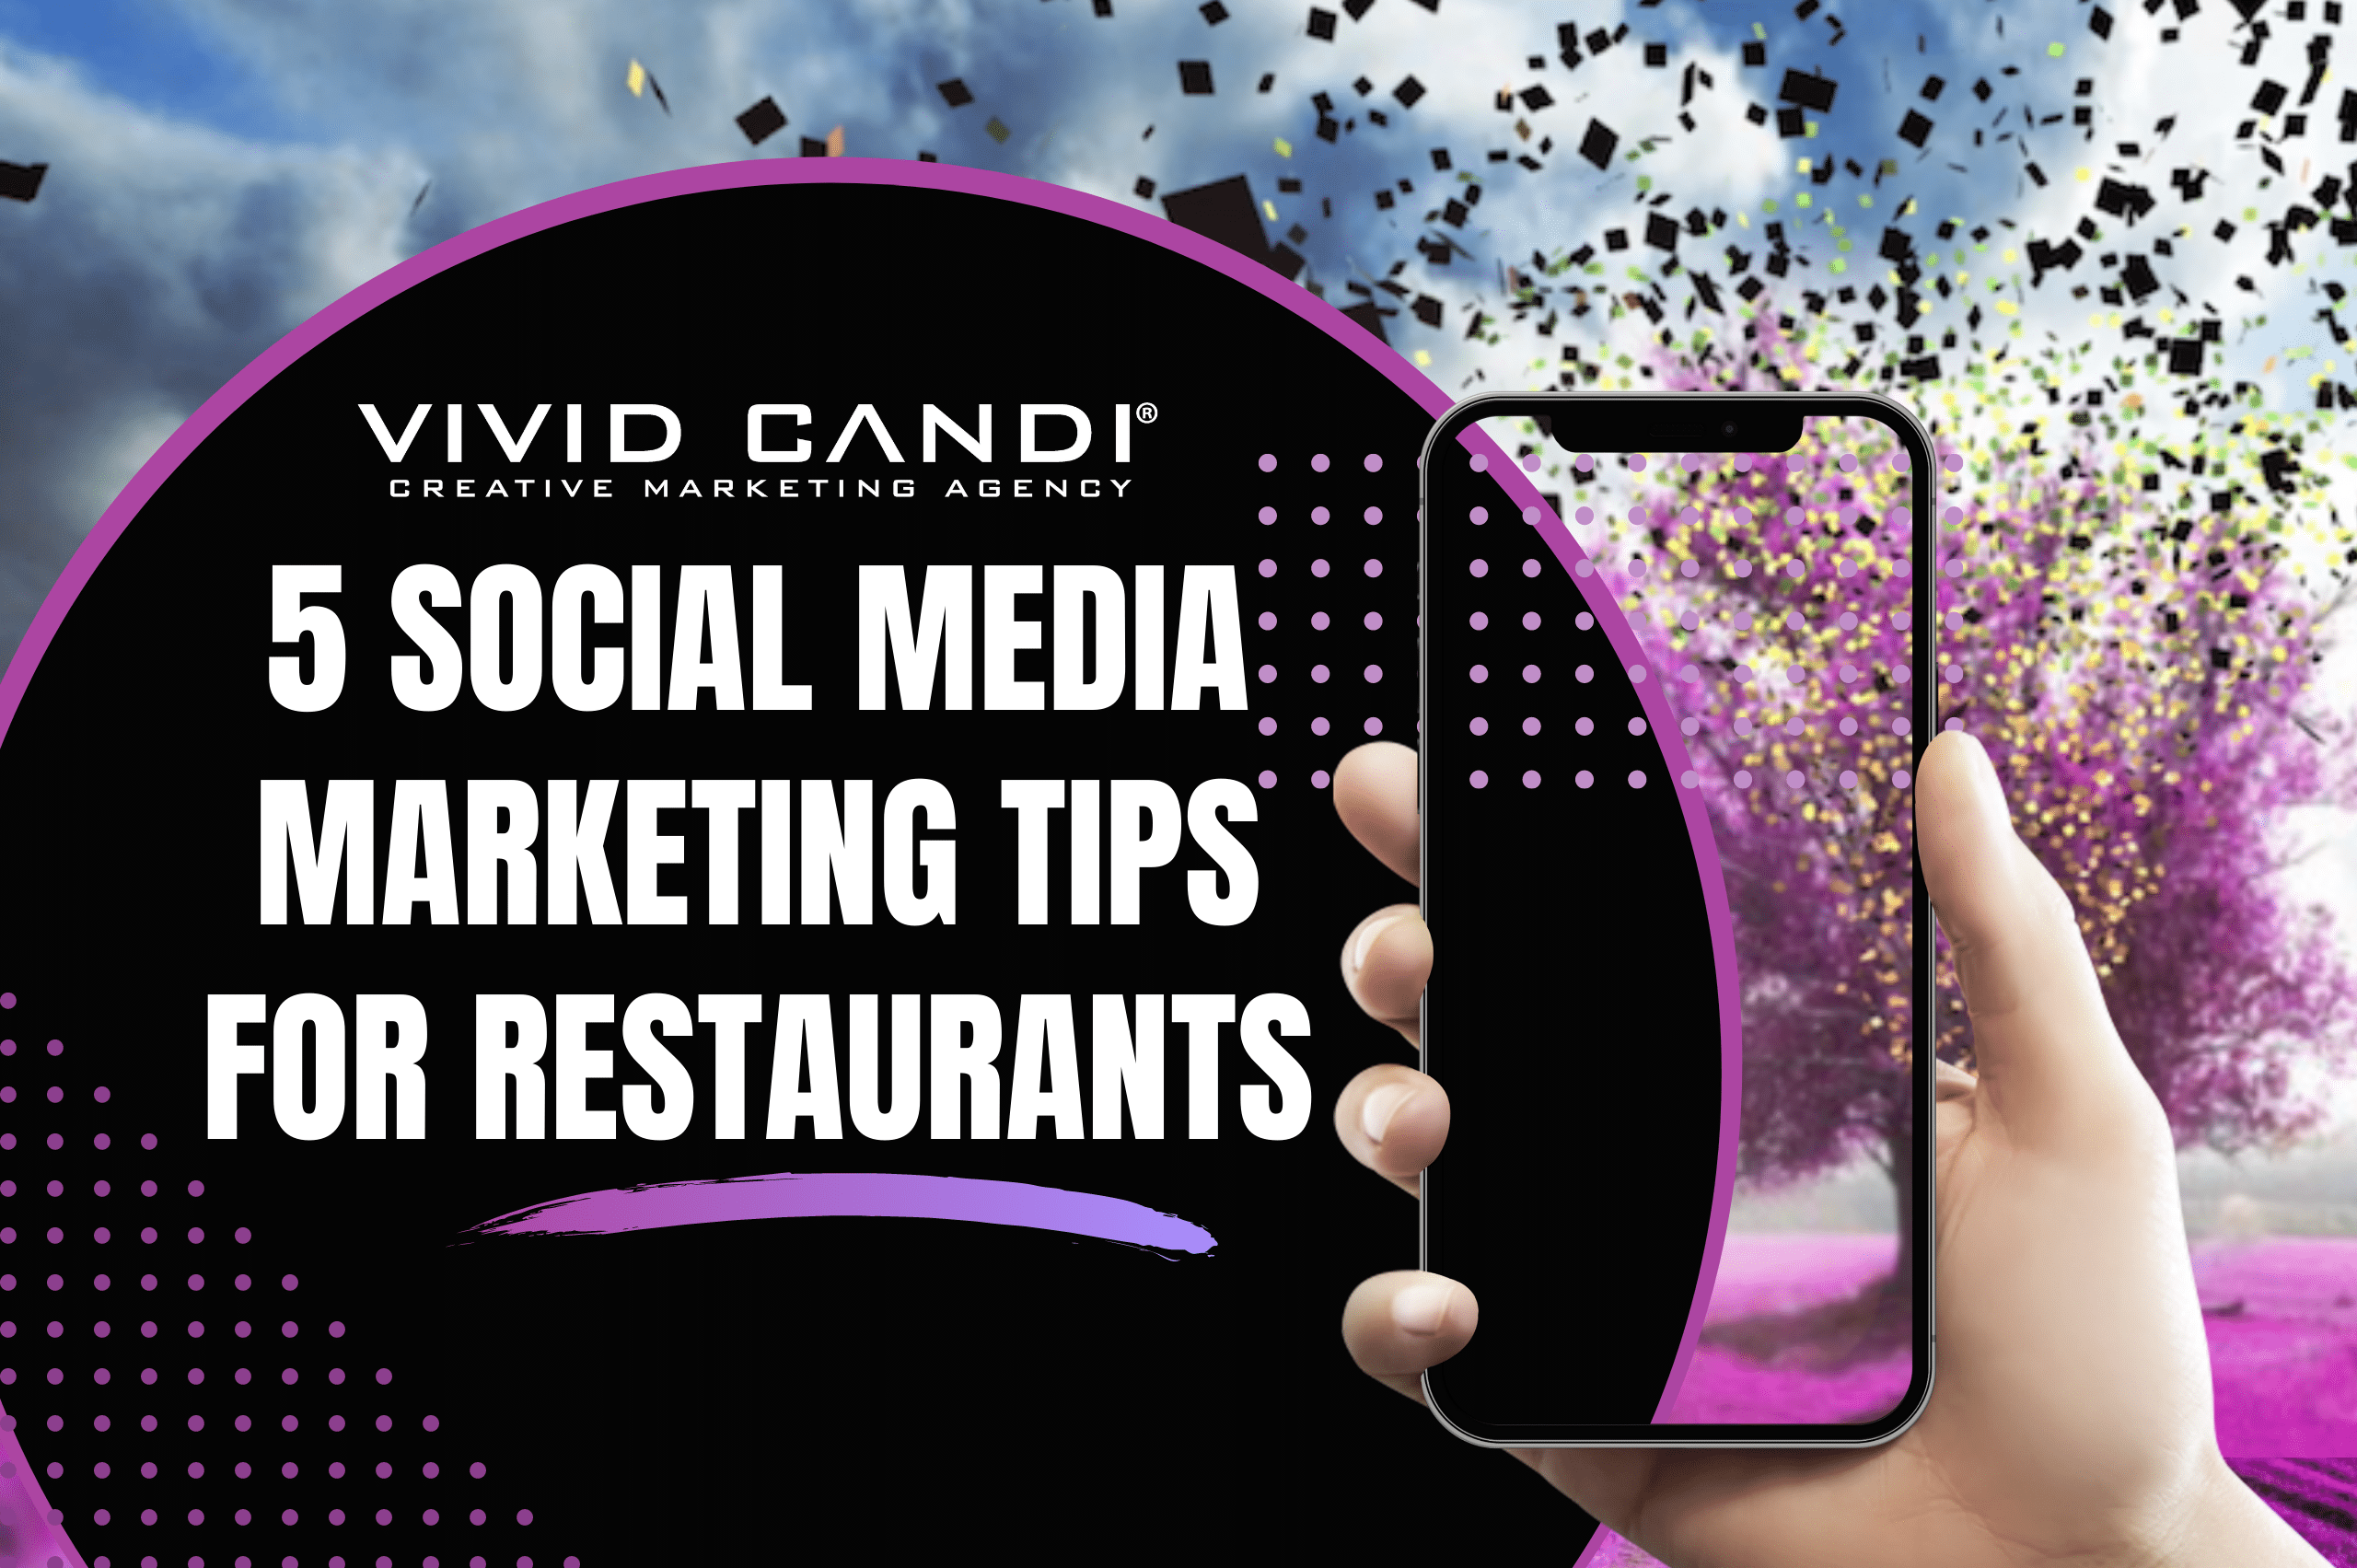 5 Social Media Marketing Tips for Restaurants - Vivid Candi Creative Marketing Agency